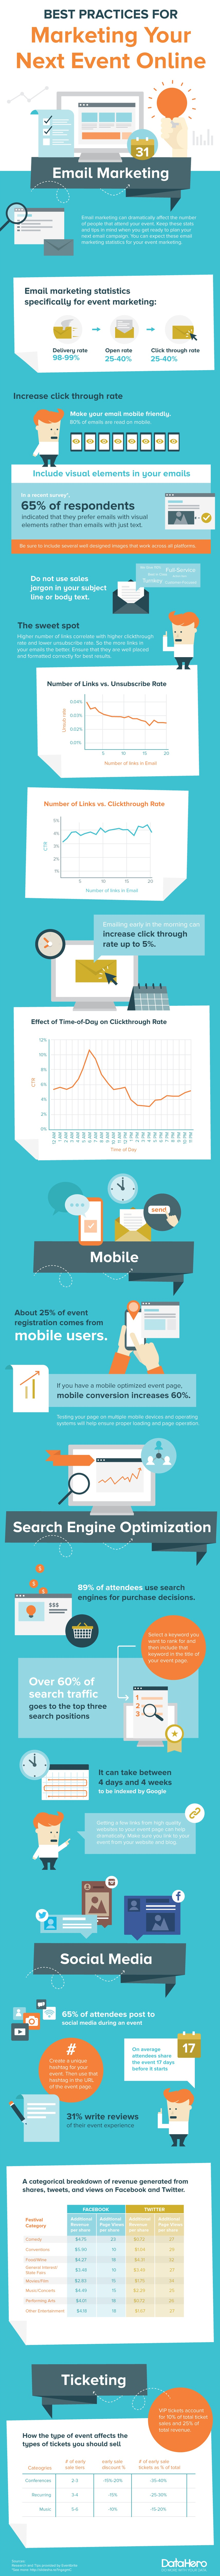 event-marketing-online-infographic.jpg